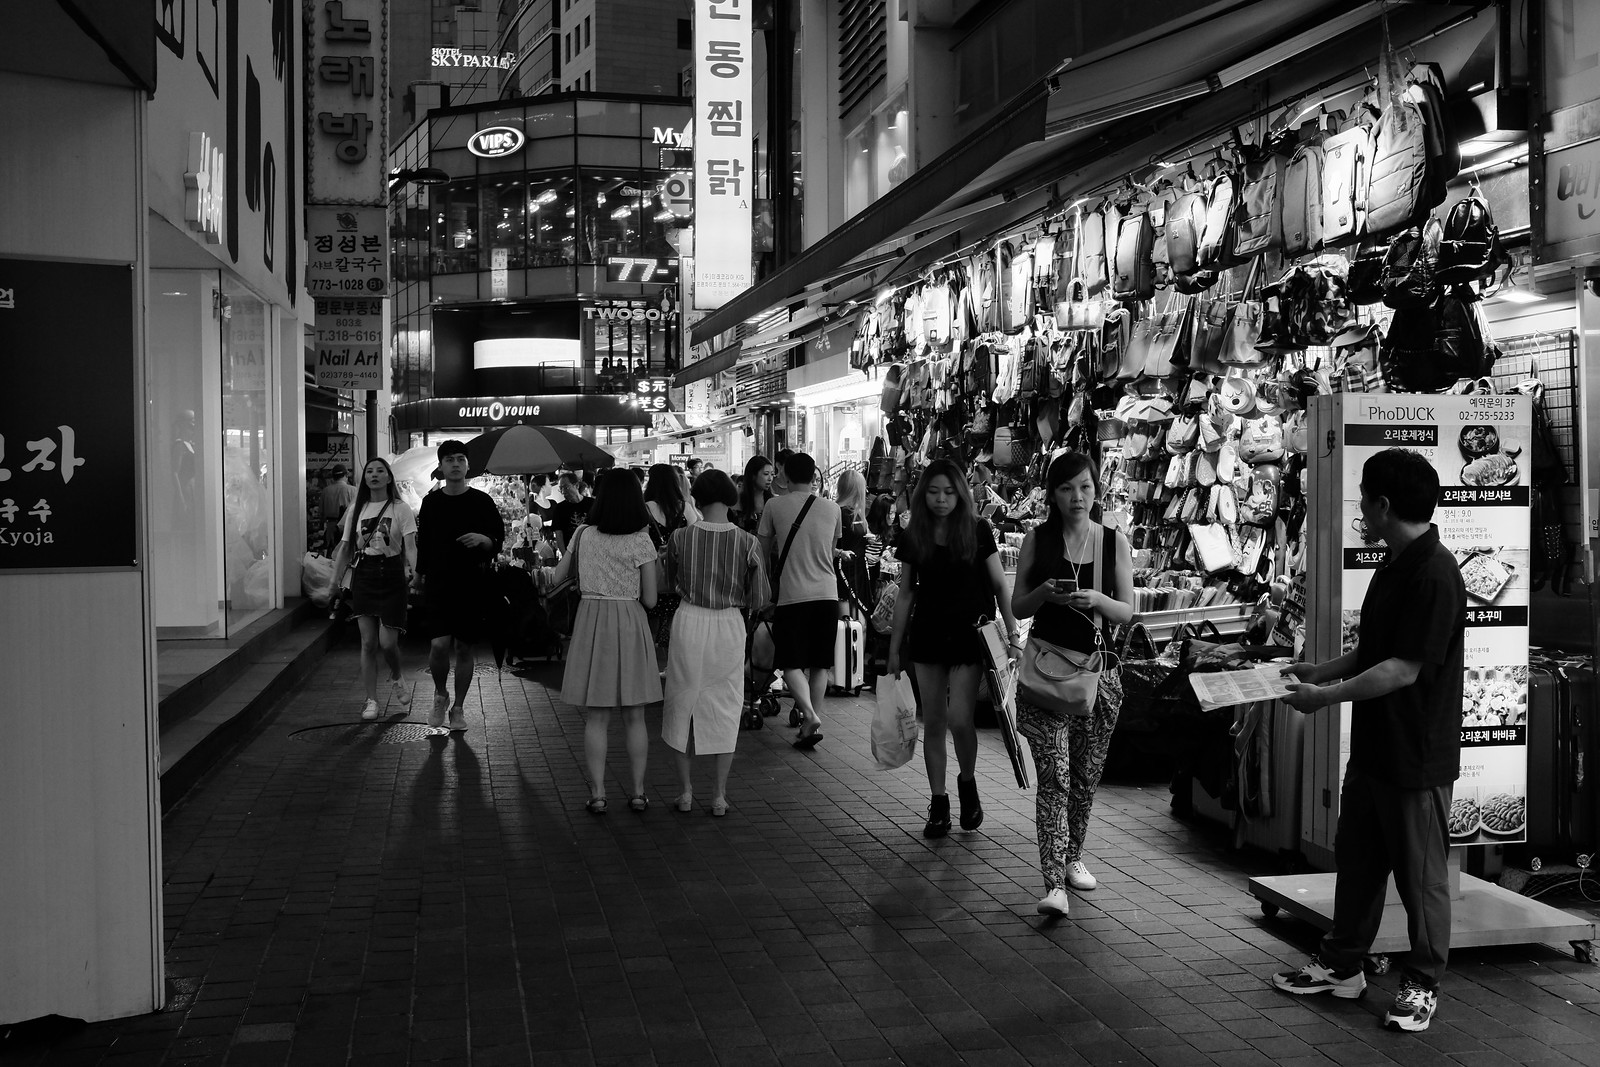 Seoul night photo 2017